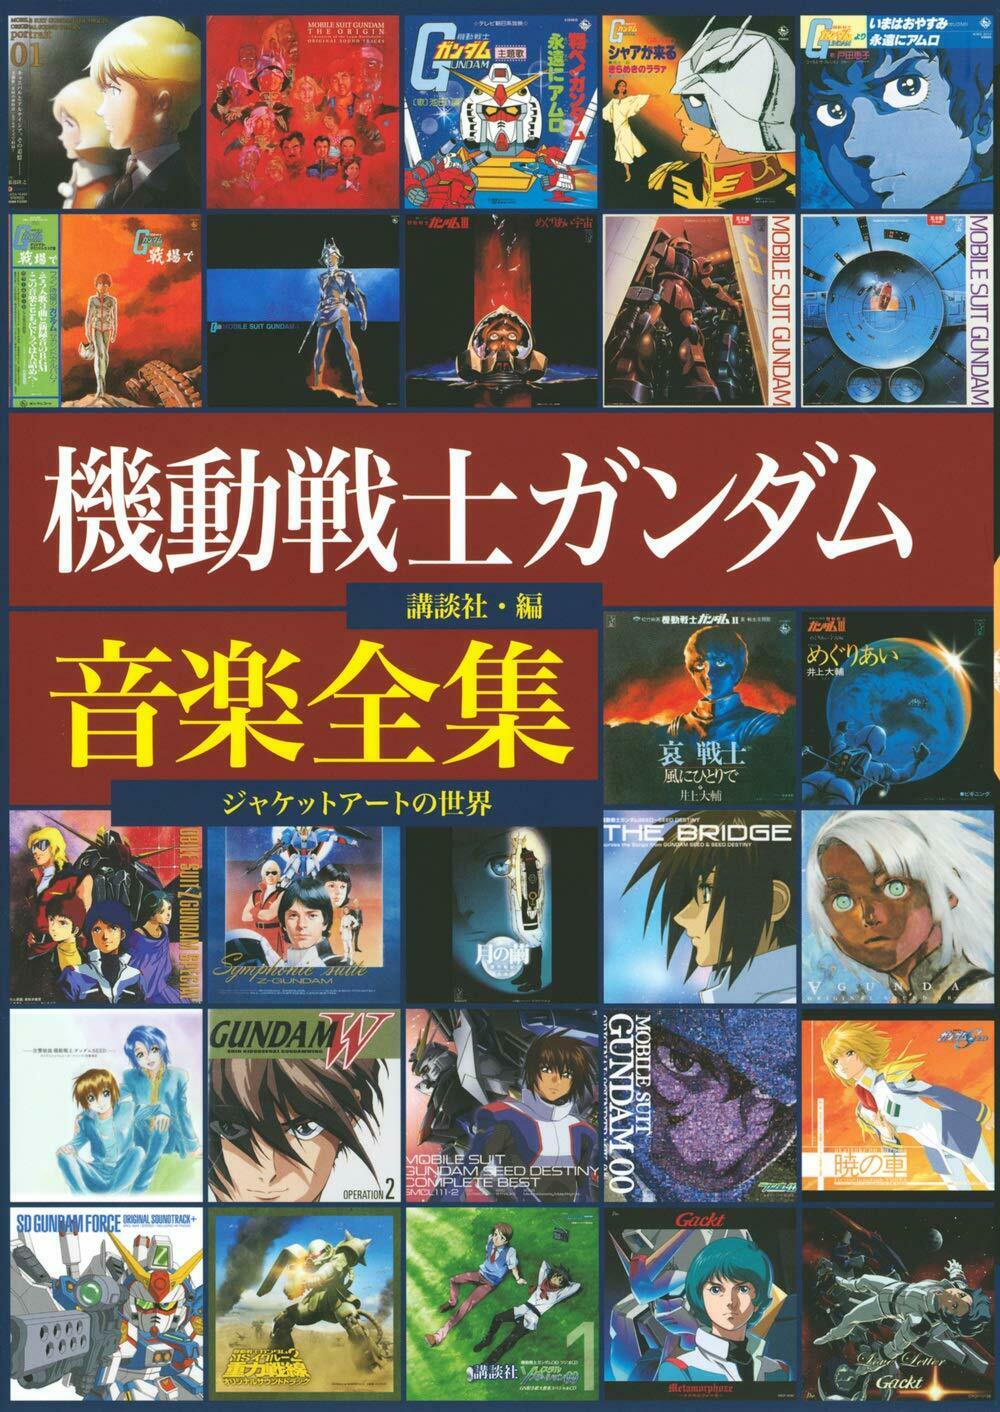 NEW' Mobile Suit Gundam Album Cover Artworks | JAPAN Anime CD Record Jacket Art